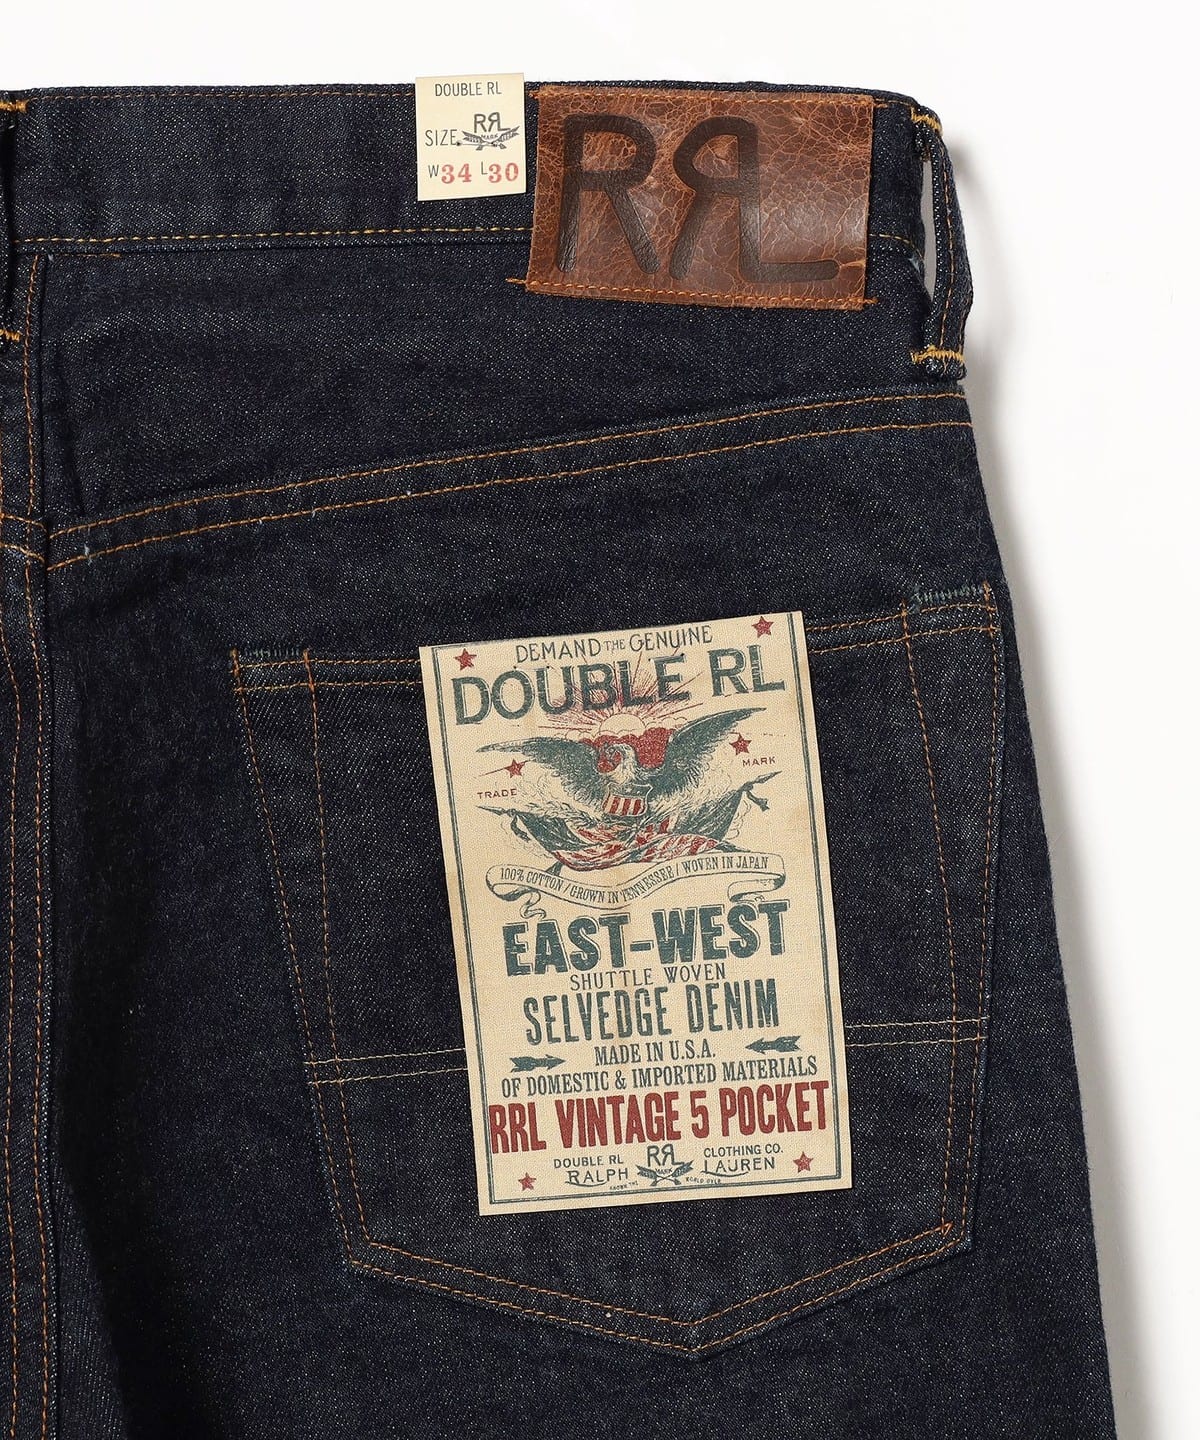 BEAMS PLUS（ビームス プラス）RRL / Vintage 5-Pocket East-West 